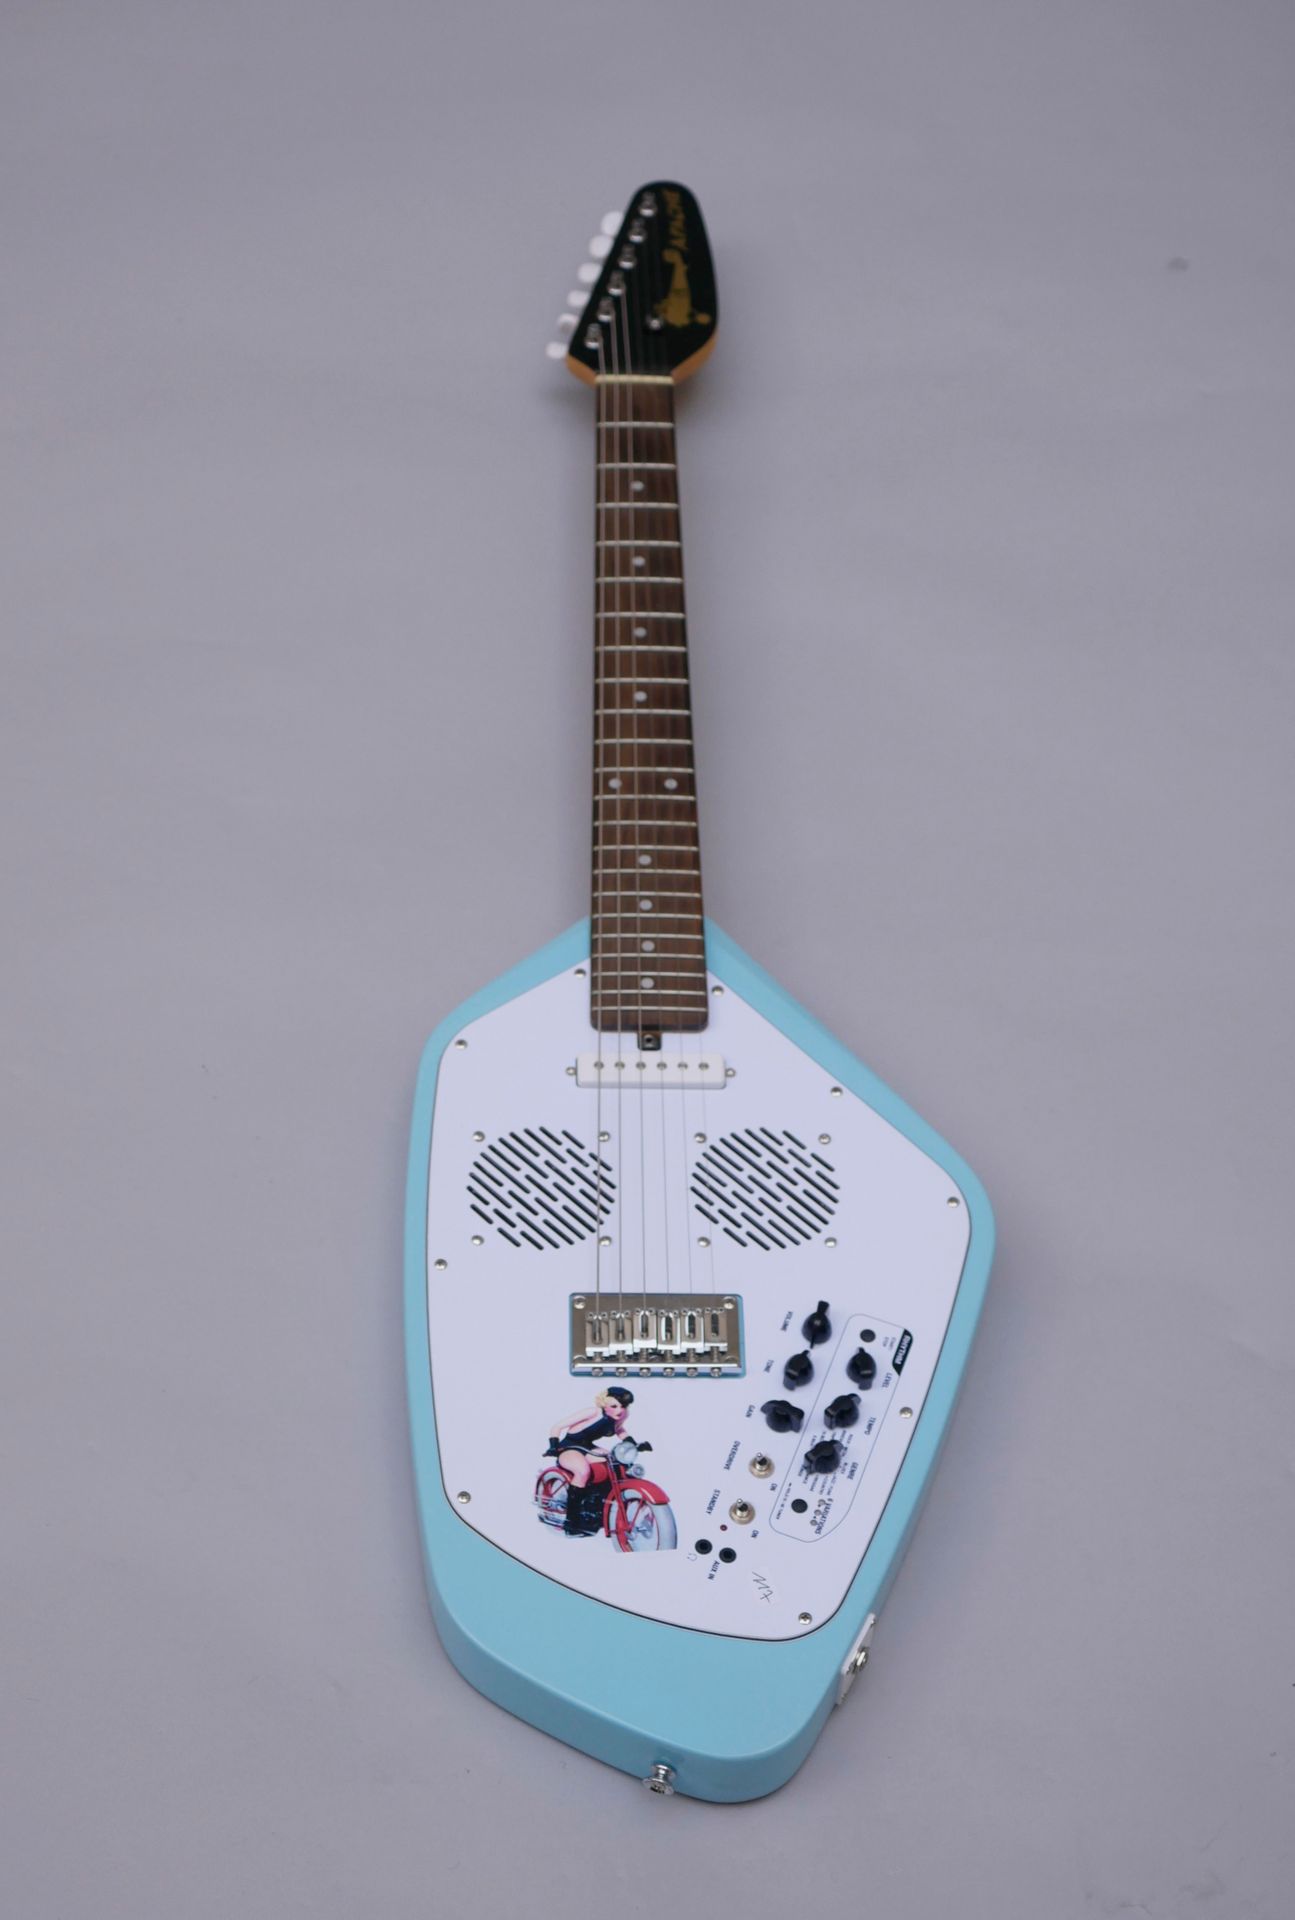 Null Solidbody-Elektro-Gitarre der Marke VOX Modell Apache 2, made in China ca..&hellip;